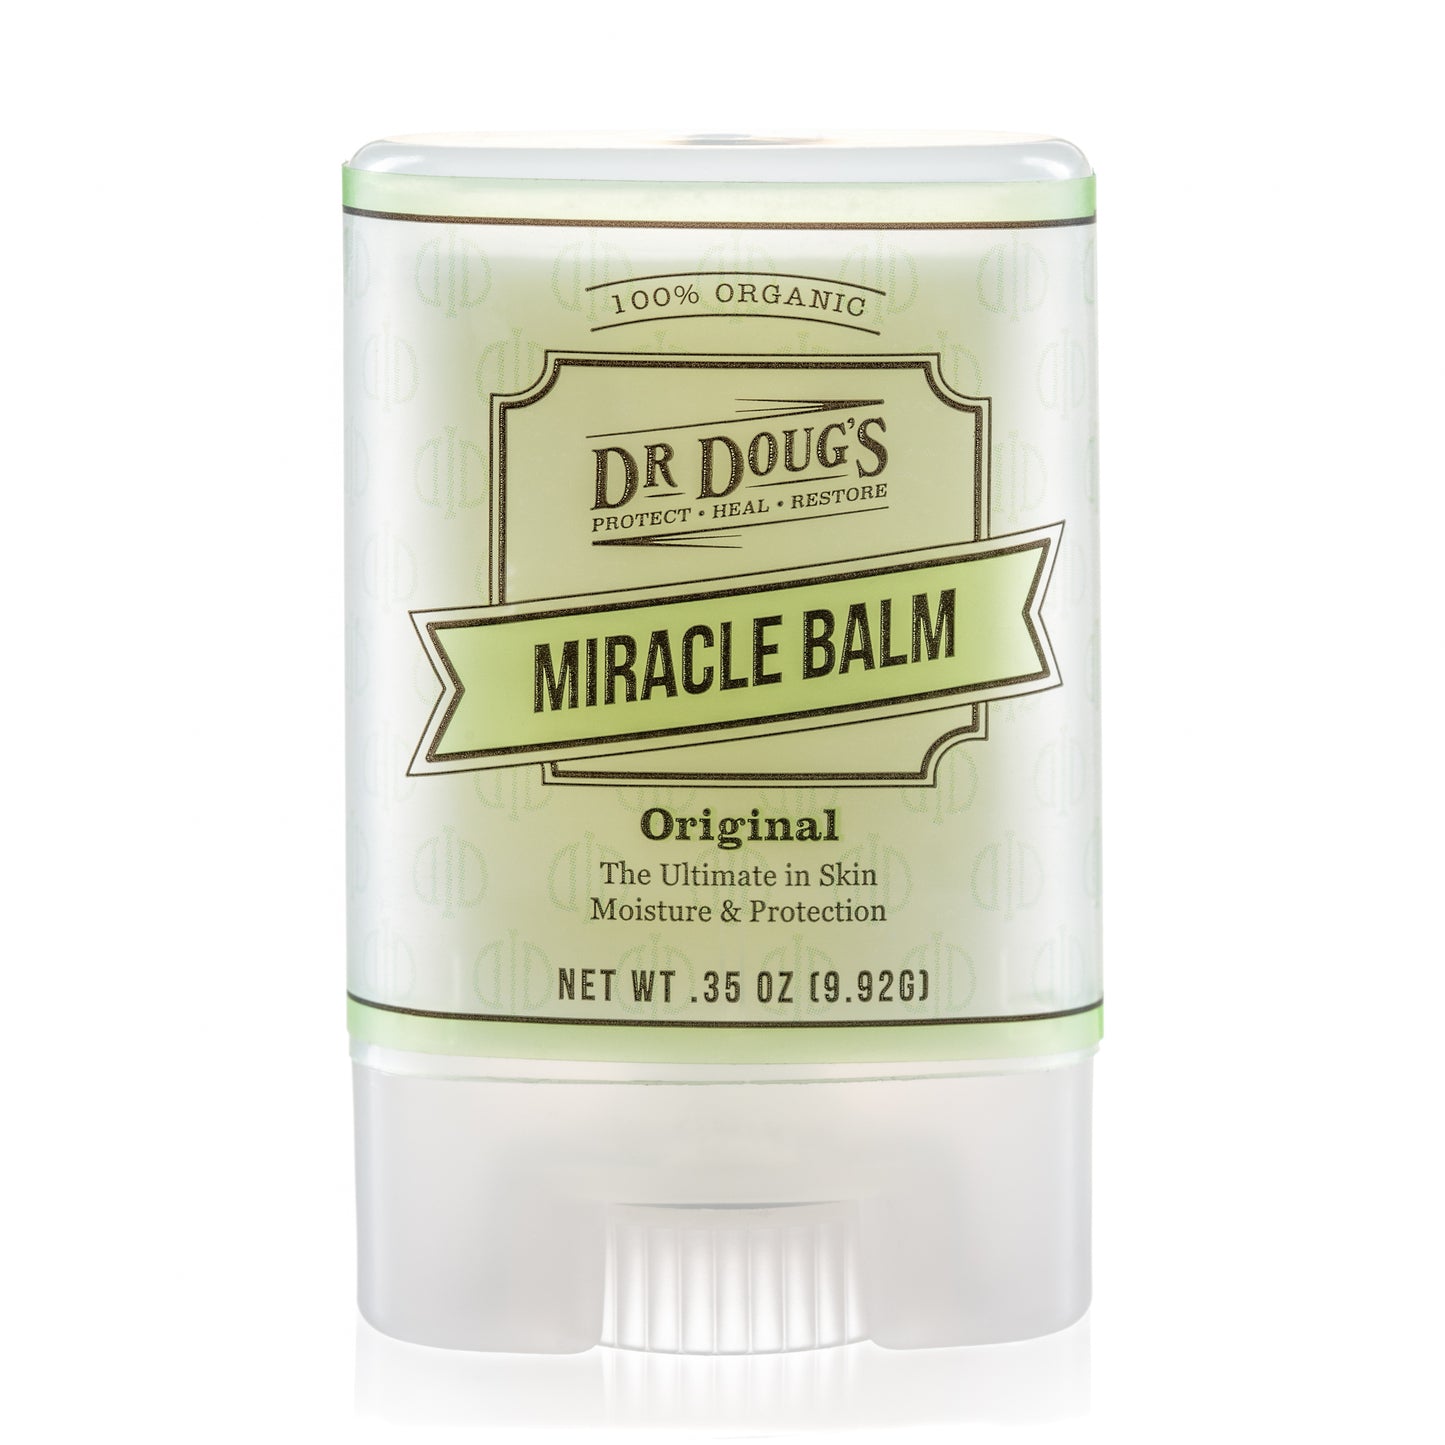 Original Miracle Balm - Dr. Doug's Miracle Balms